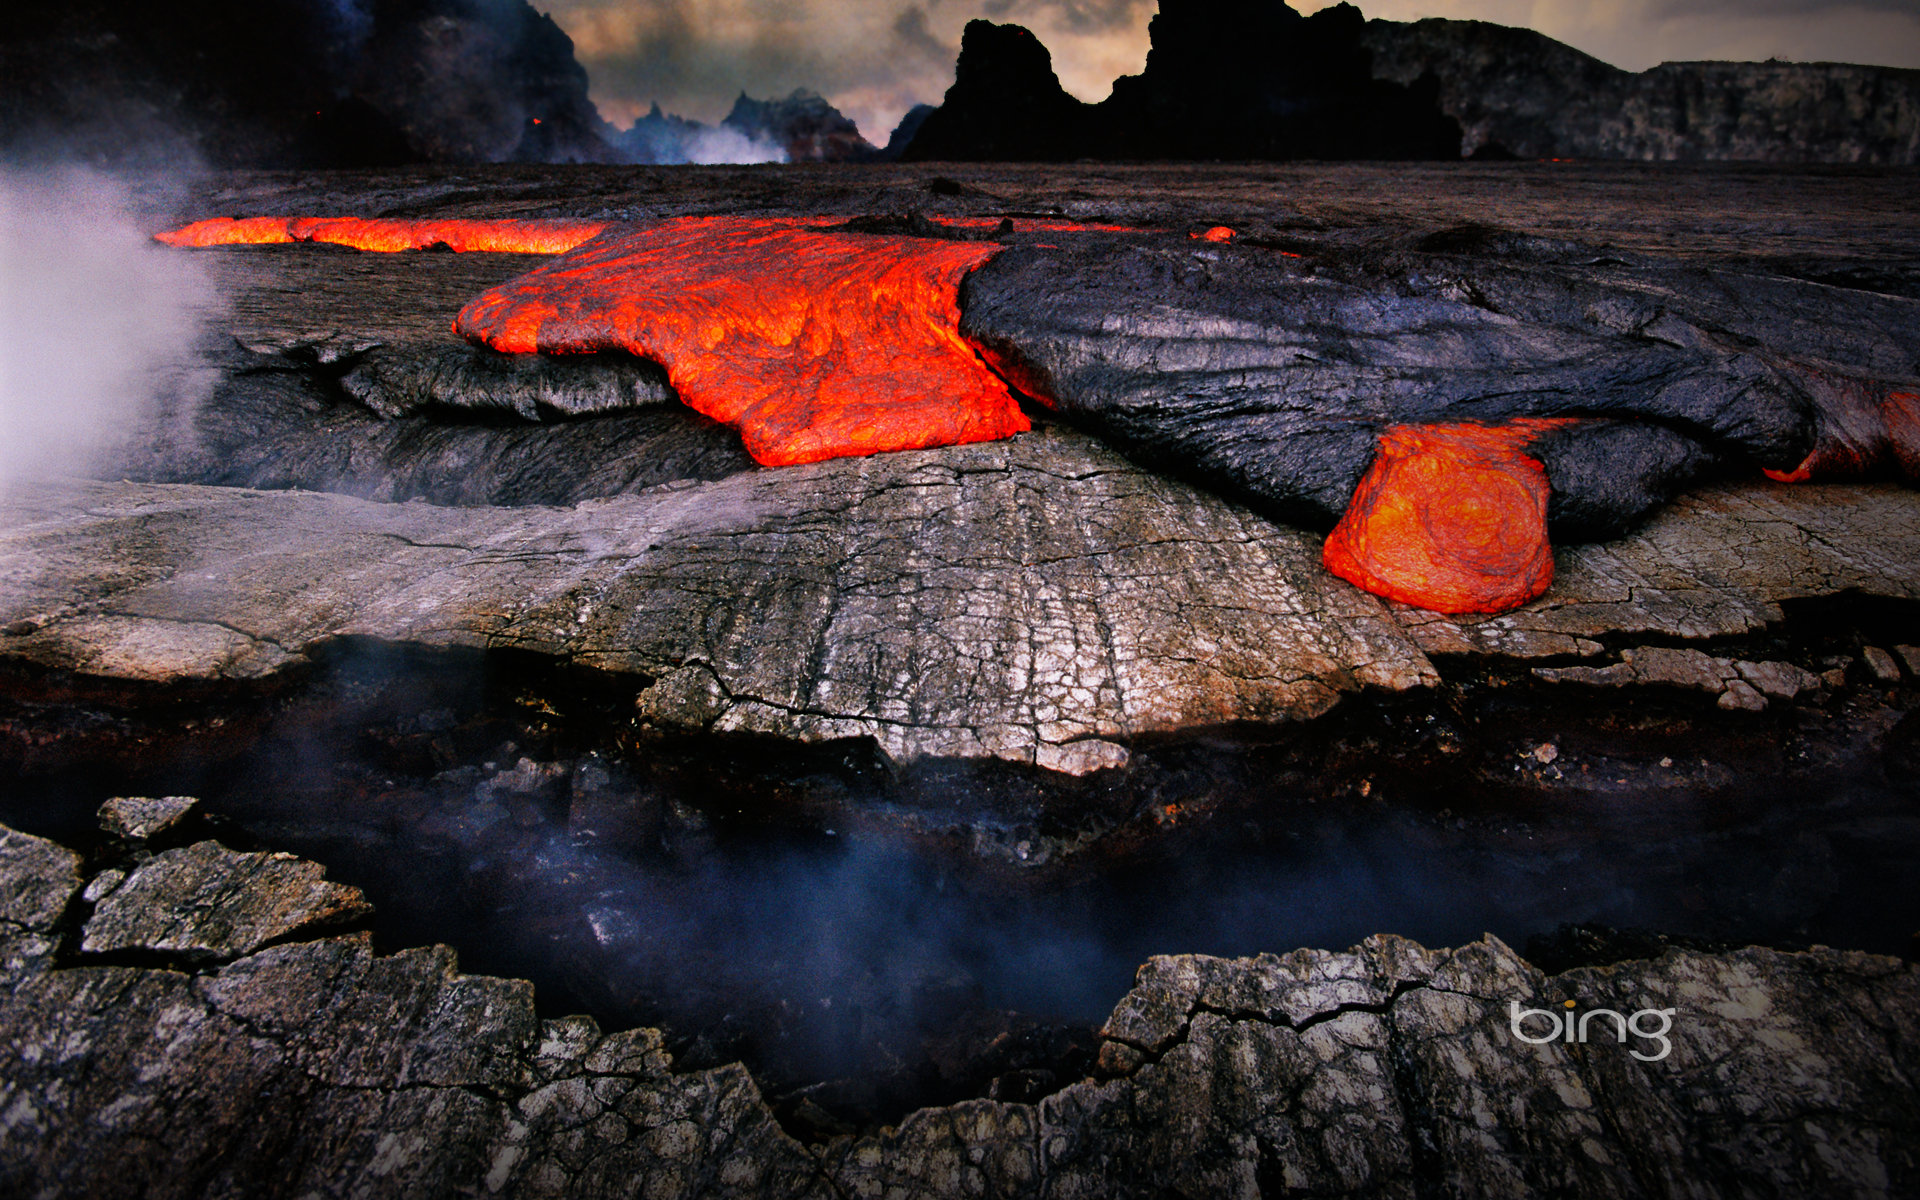 Volcano Of Bing Hawaii Lava Windowstheme Wallpaper with